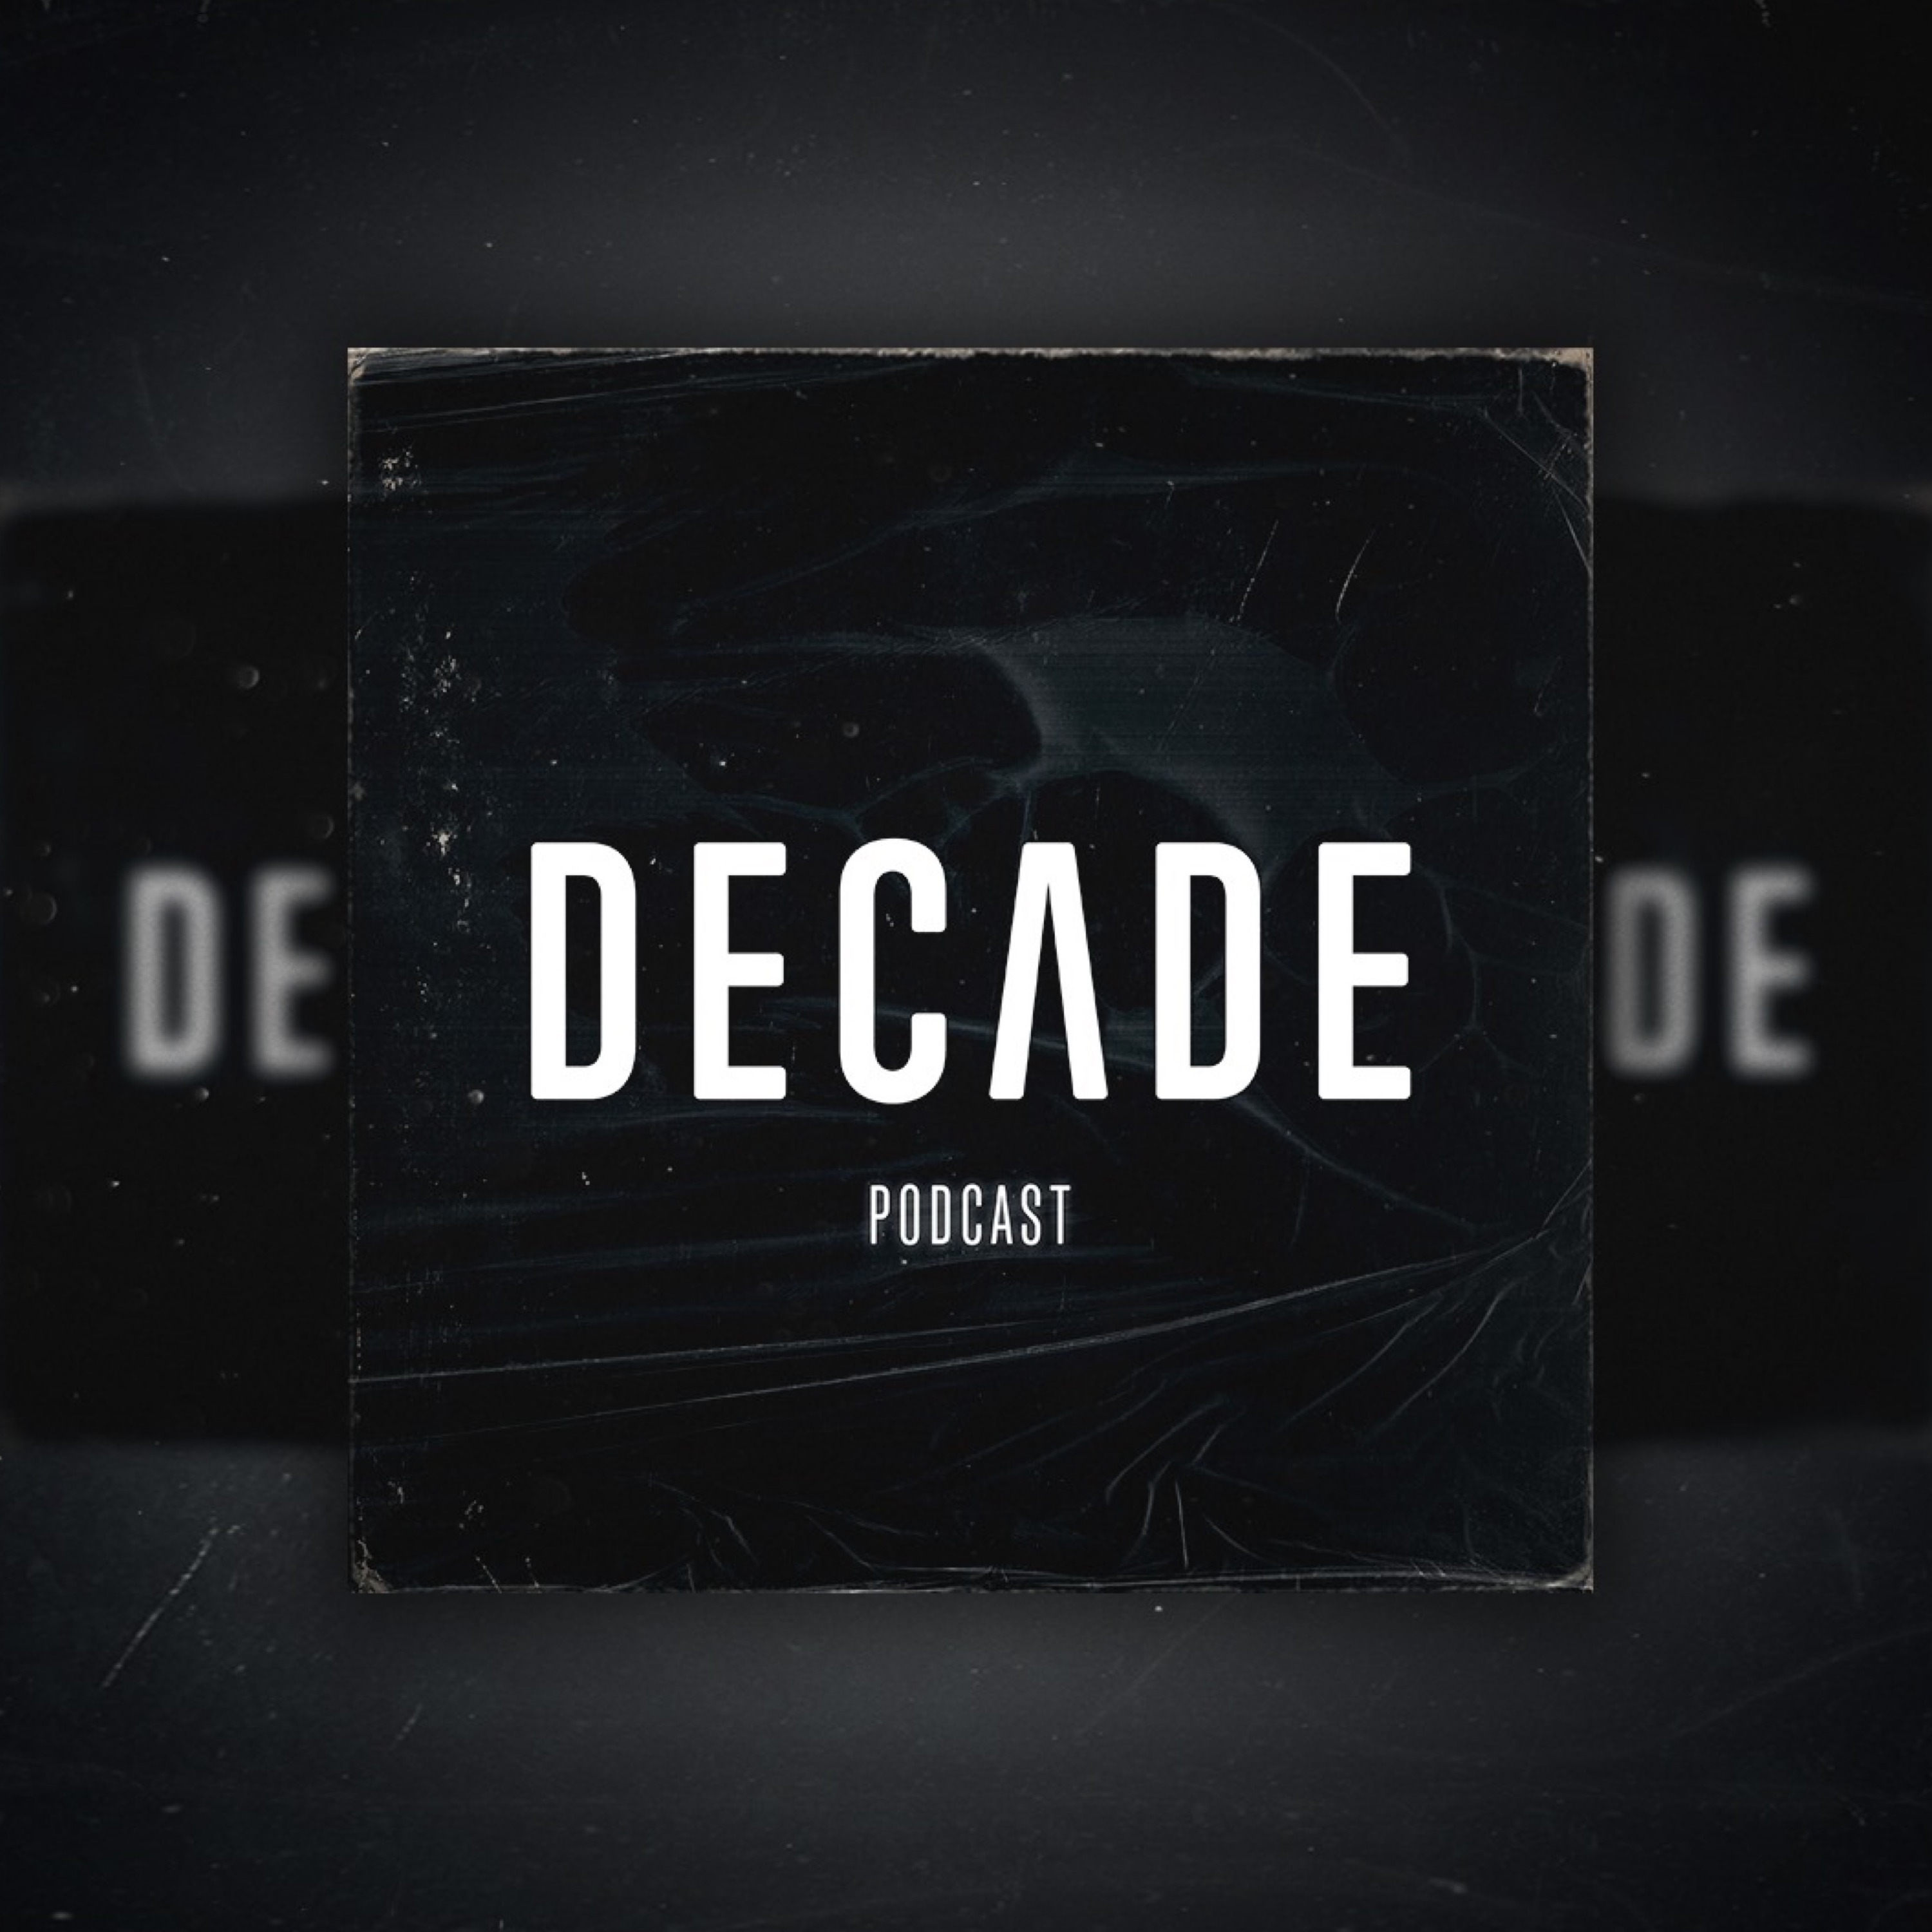 Decade Podcast